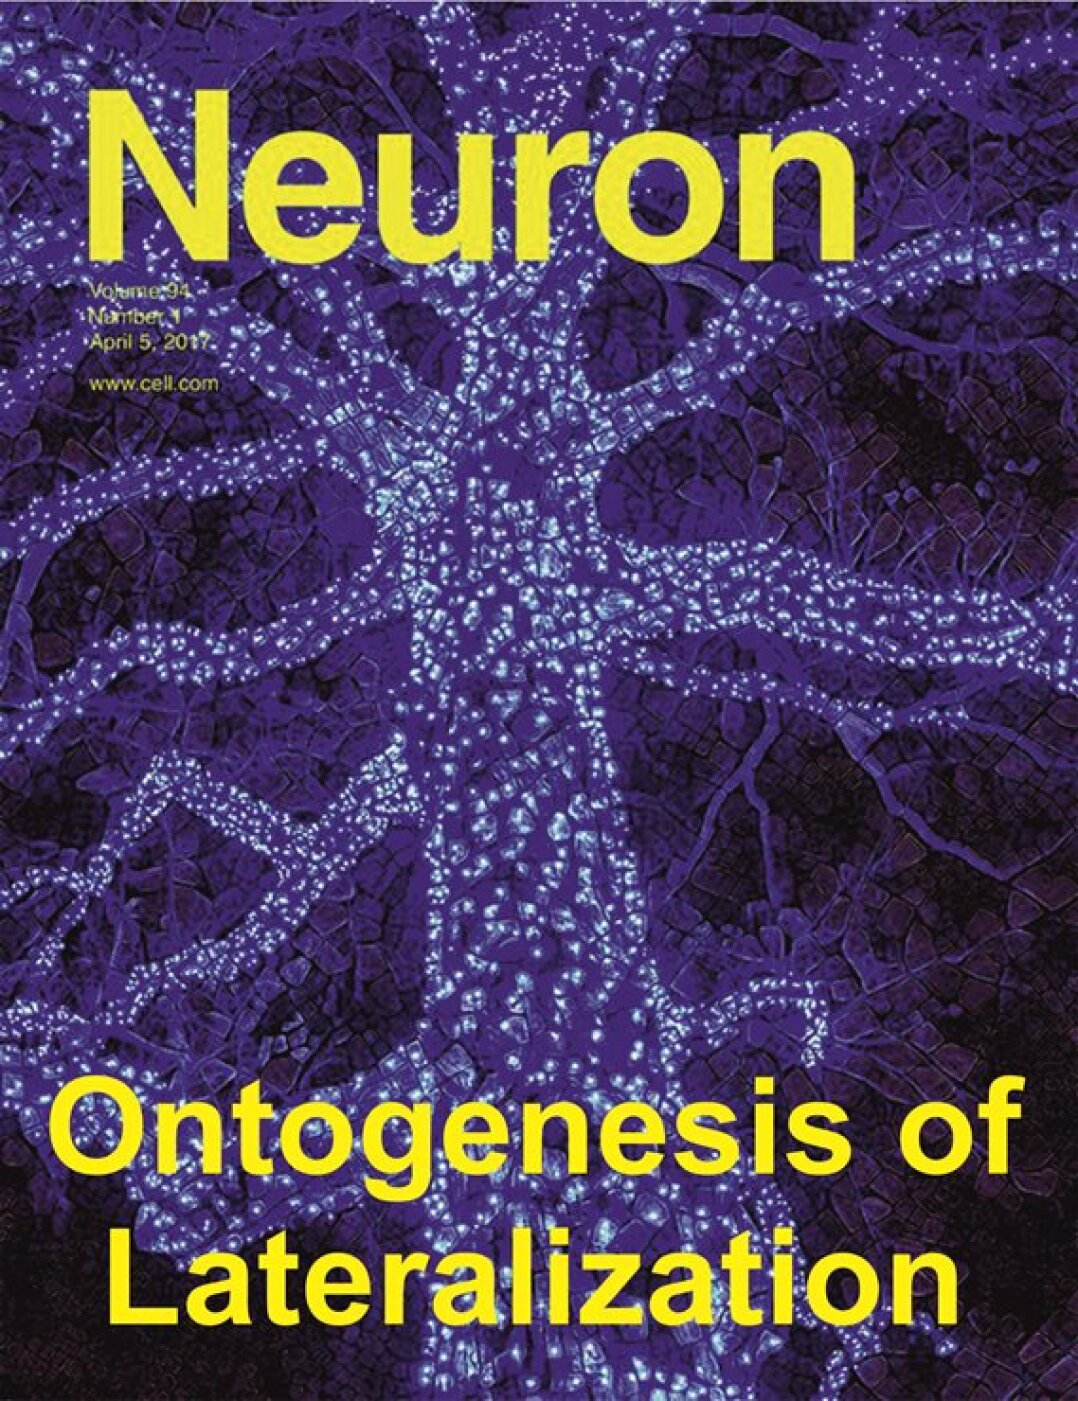 Ontogenesis of lateralization